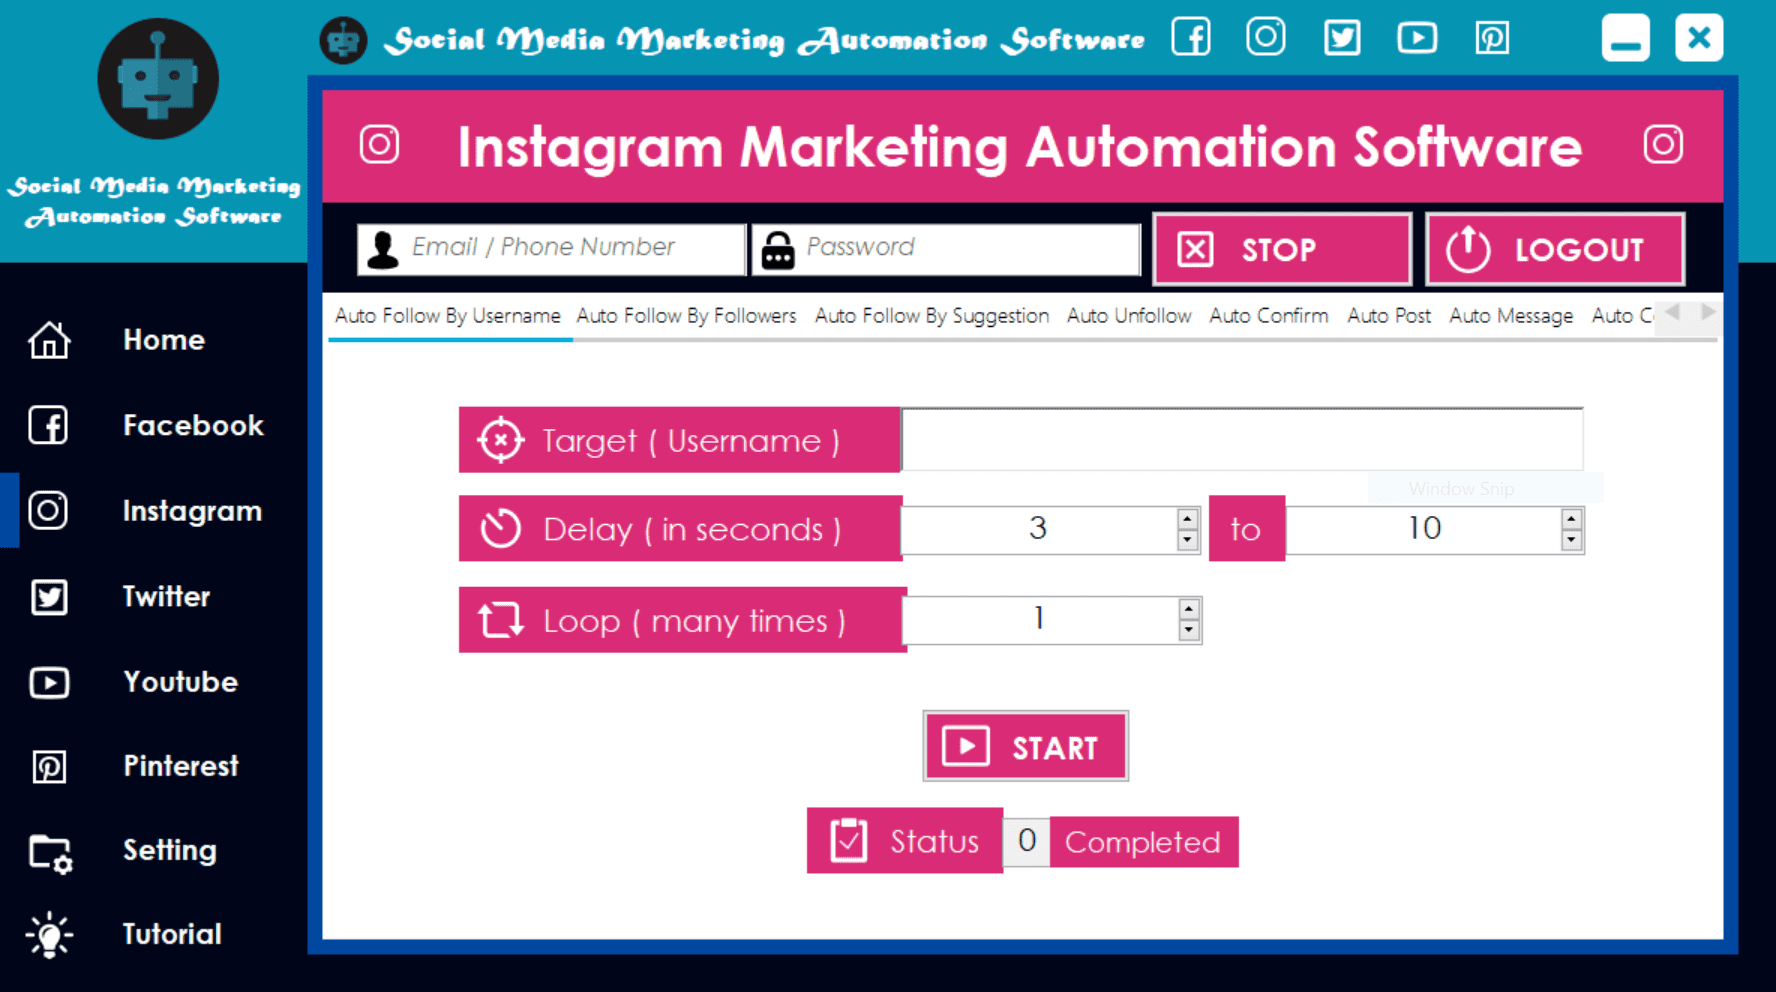 Instagram Marketing Automation Software